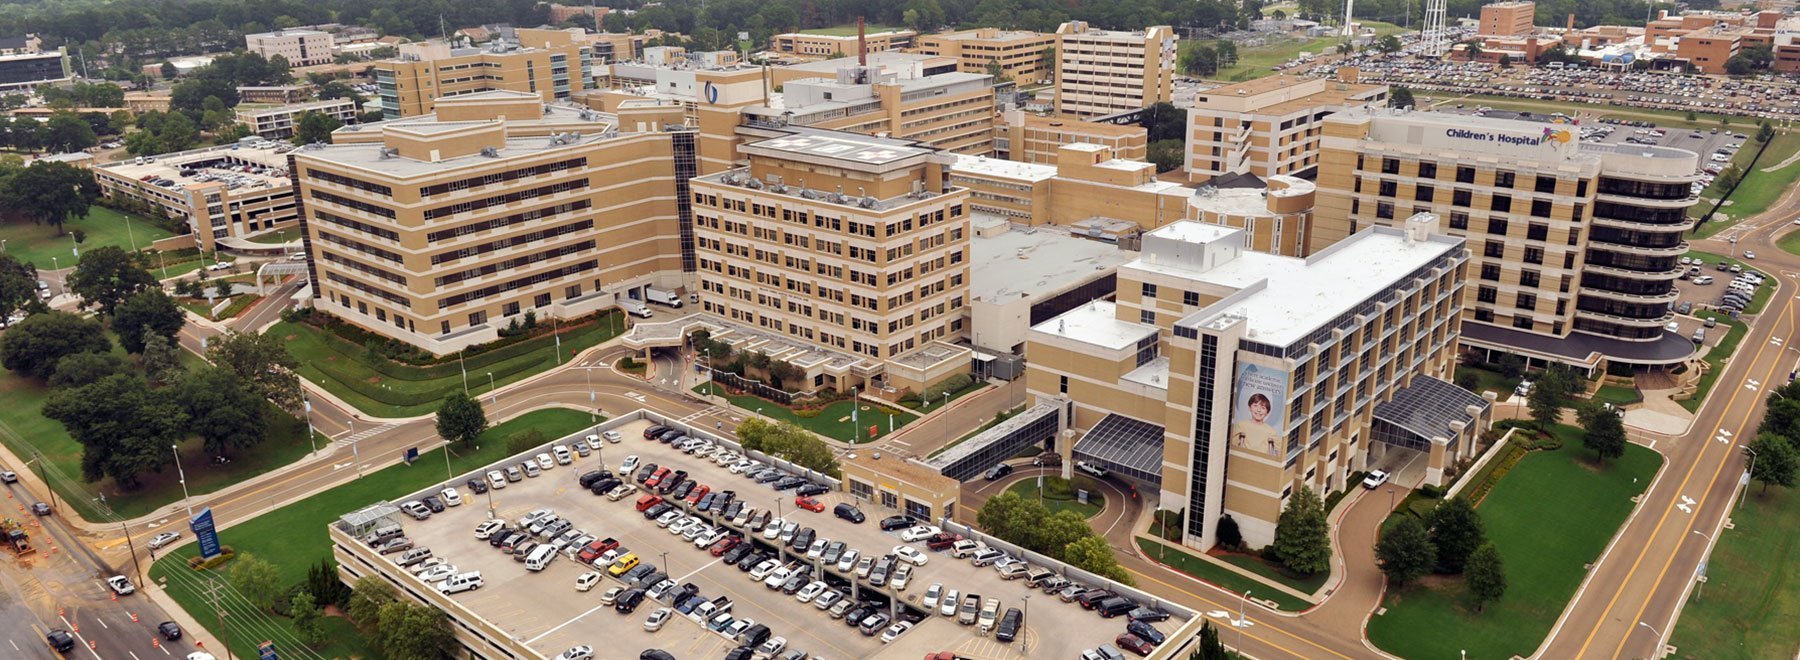 University of Mississippi medical center